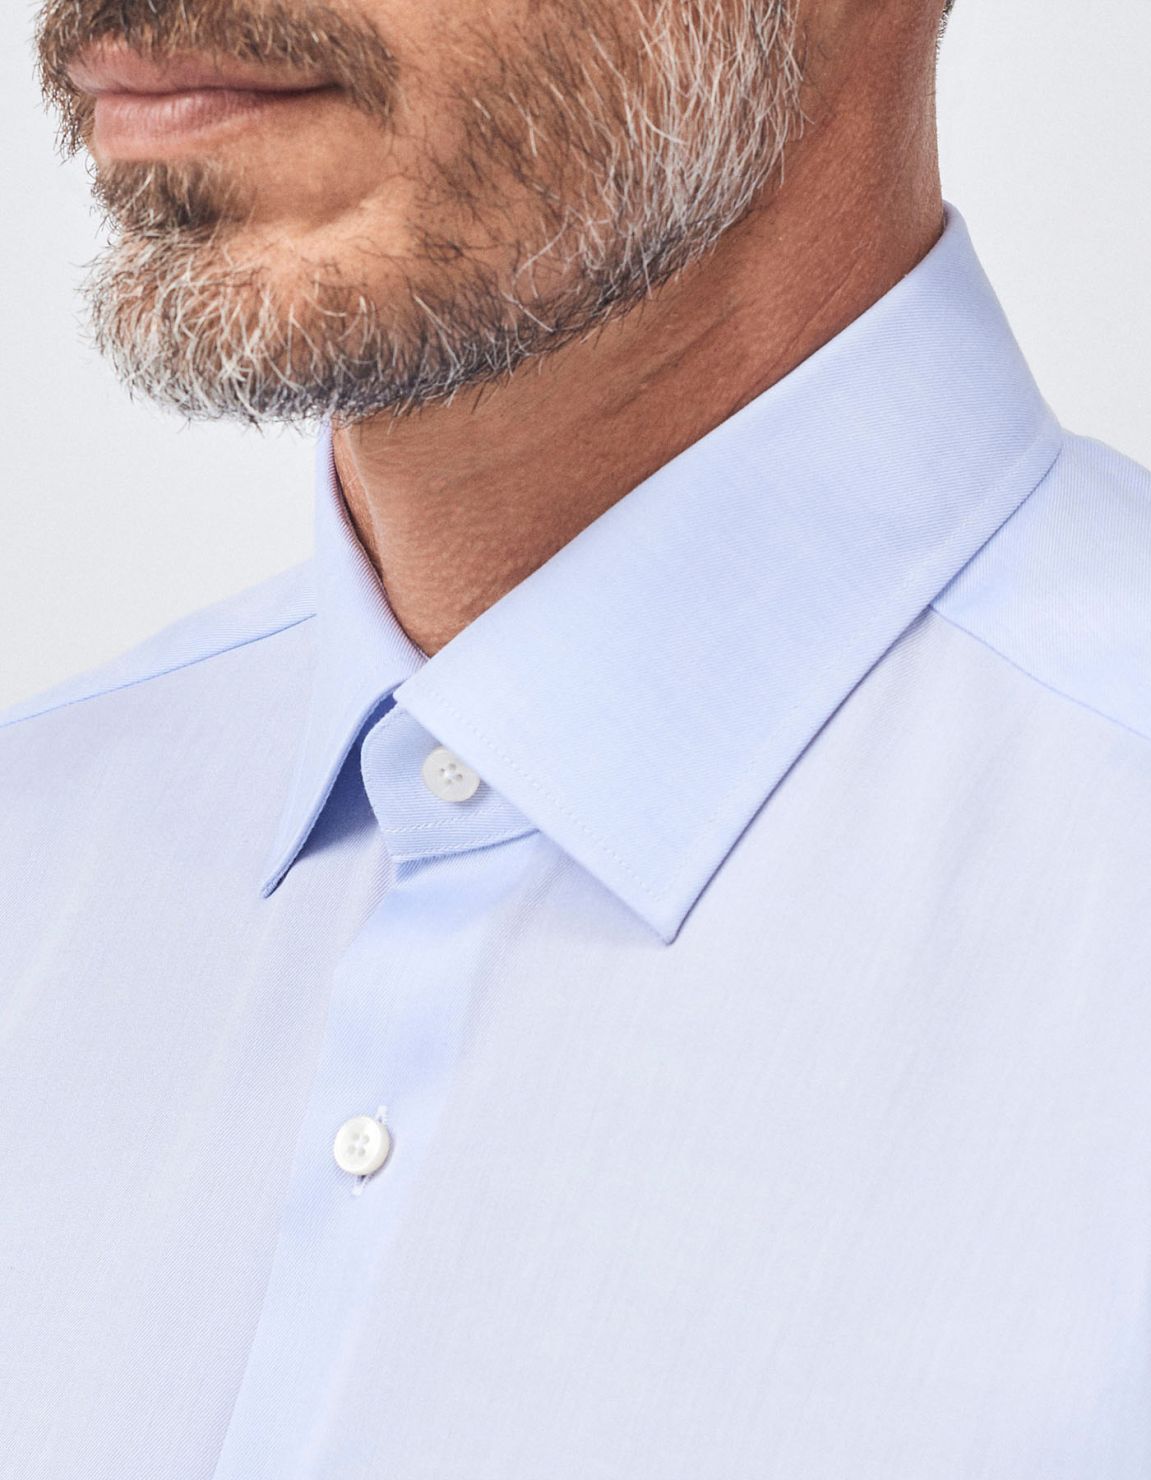 Shirt Collar spread Light Blue Twill Evolution Classic Fit 3